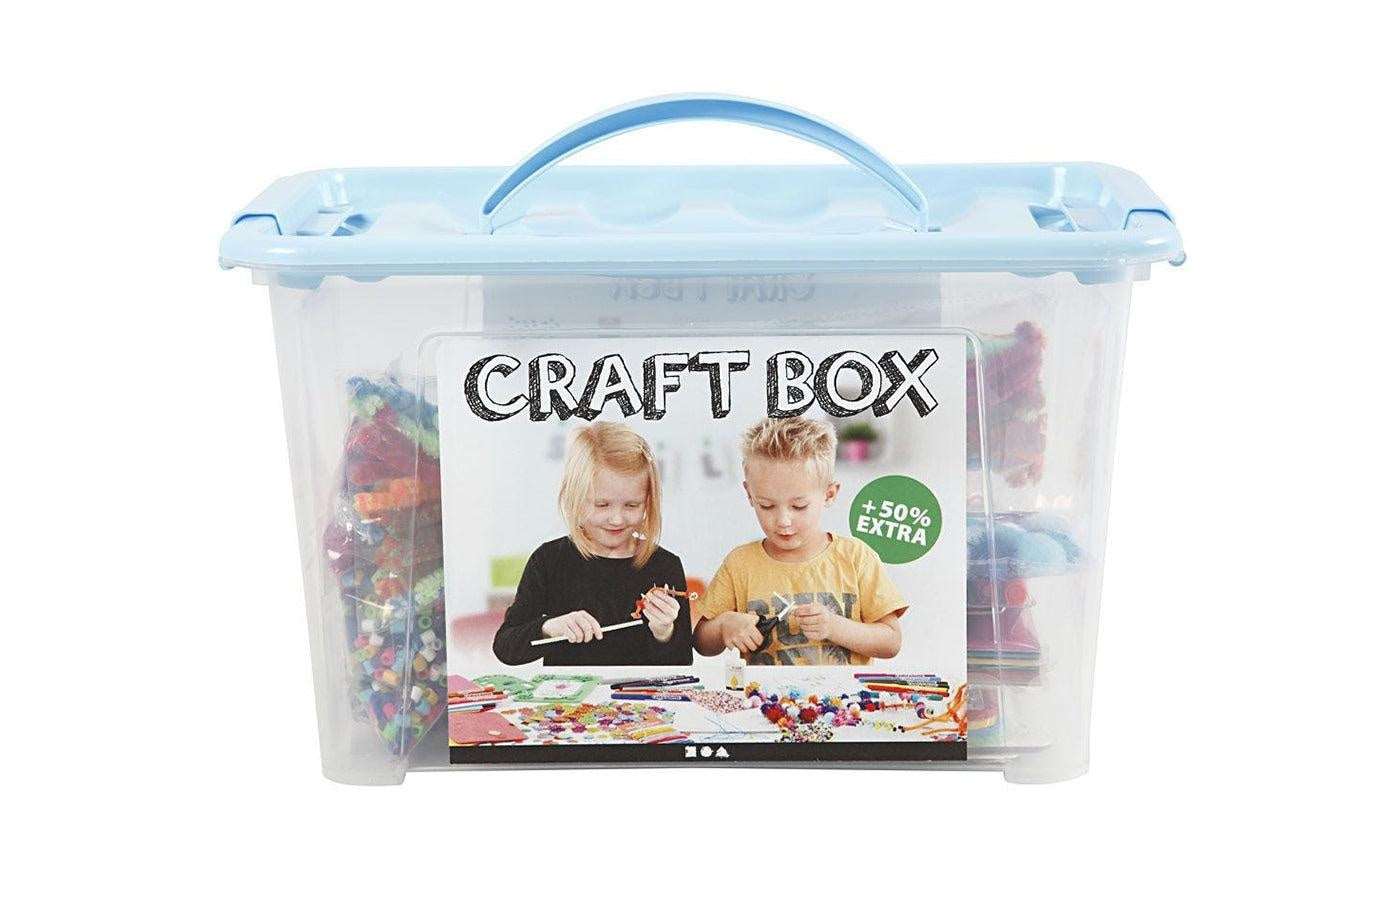 Creative (craft) box